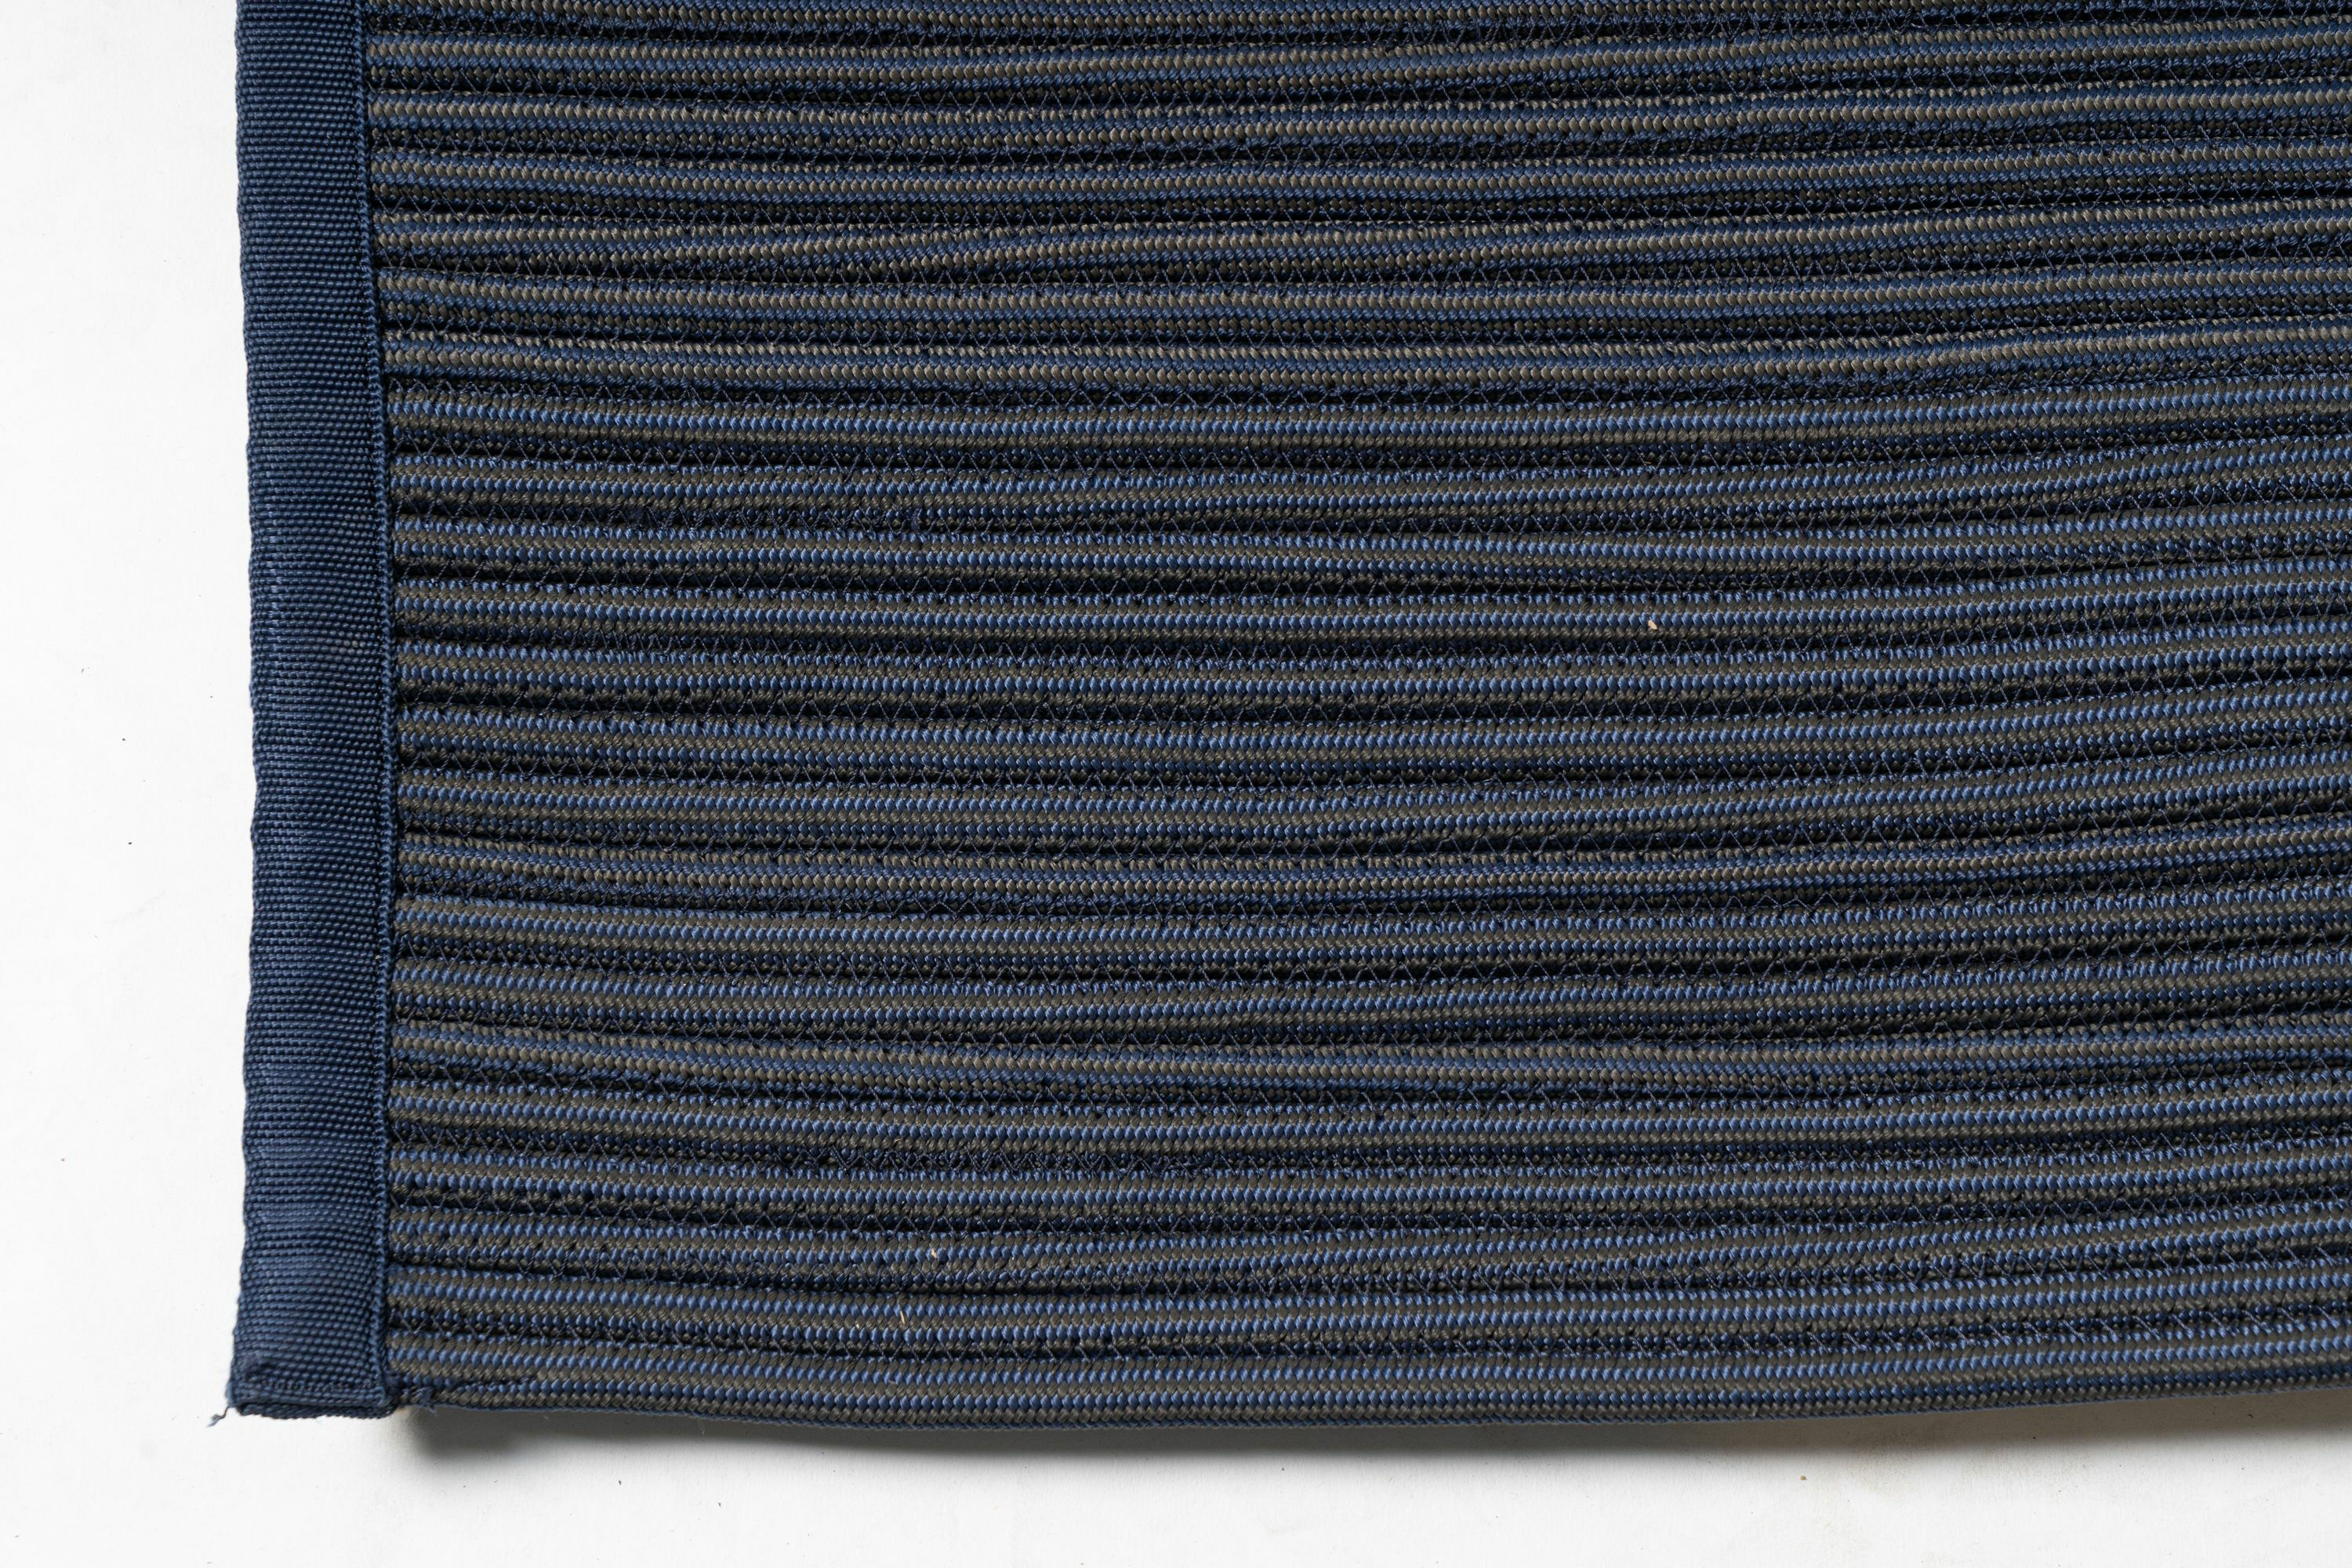 cane-line-teppich-infinity-170x240-outdoor-cane-line-link-blau-mf-0006445-001-3